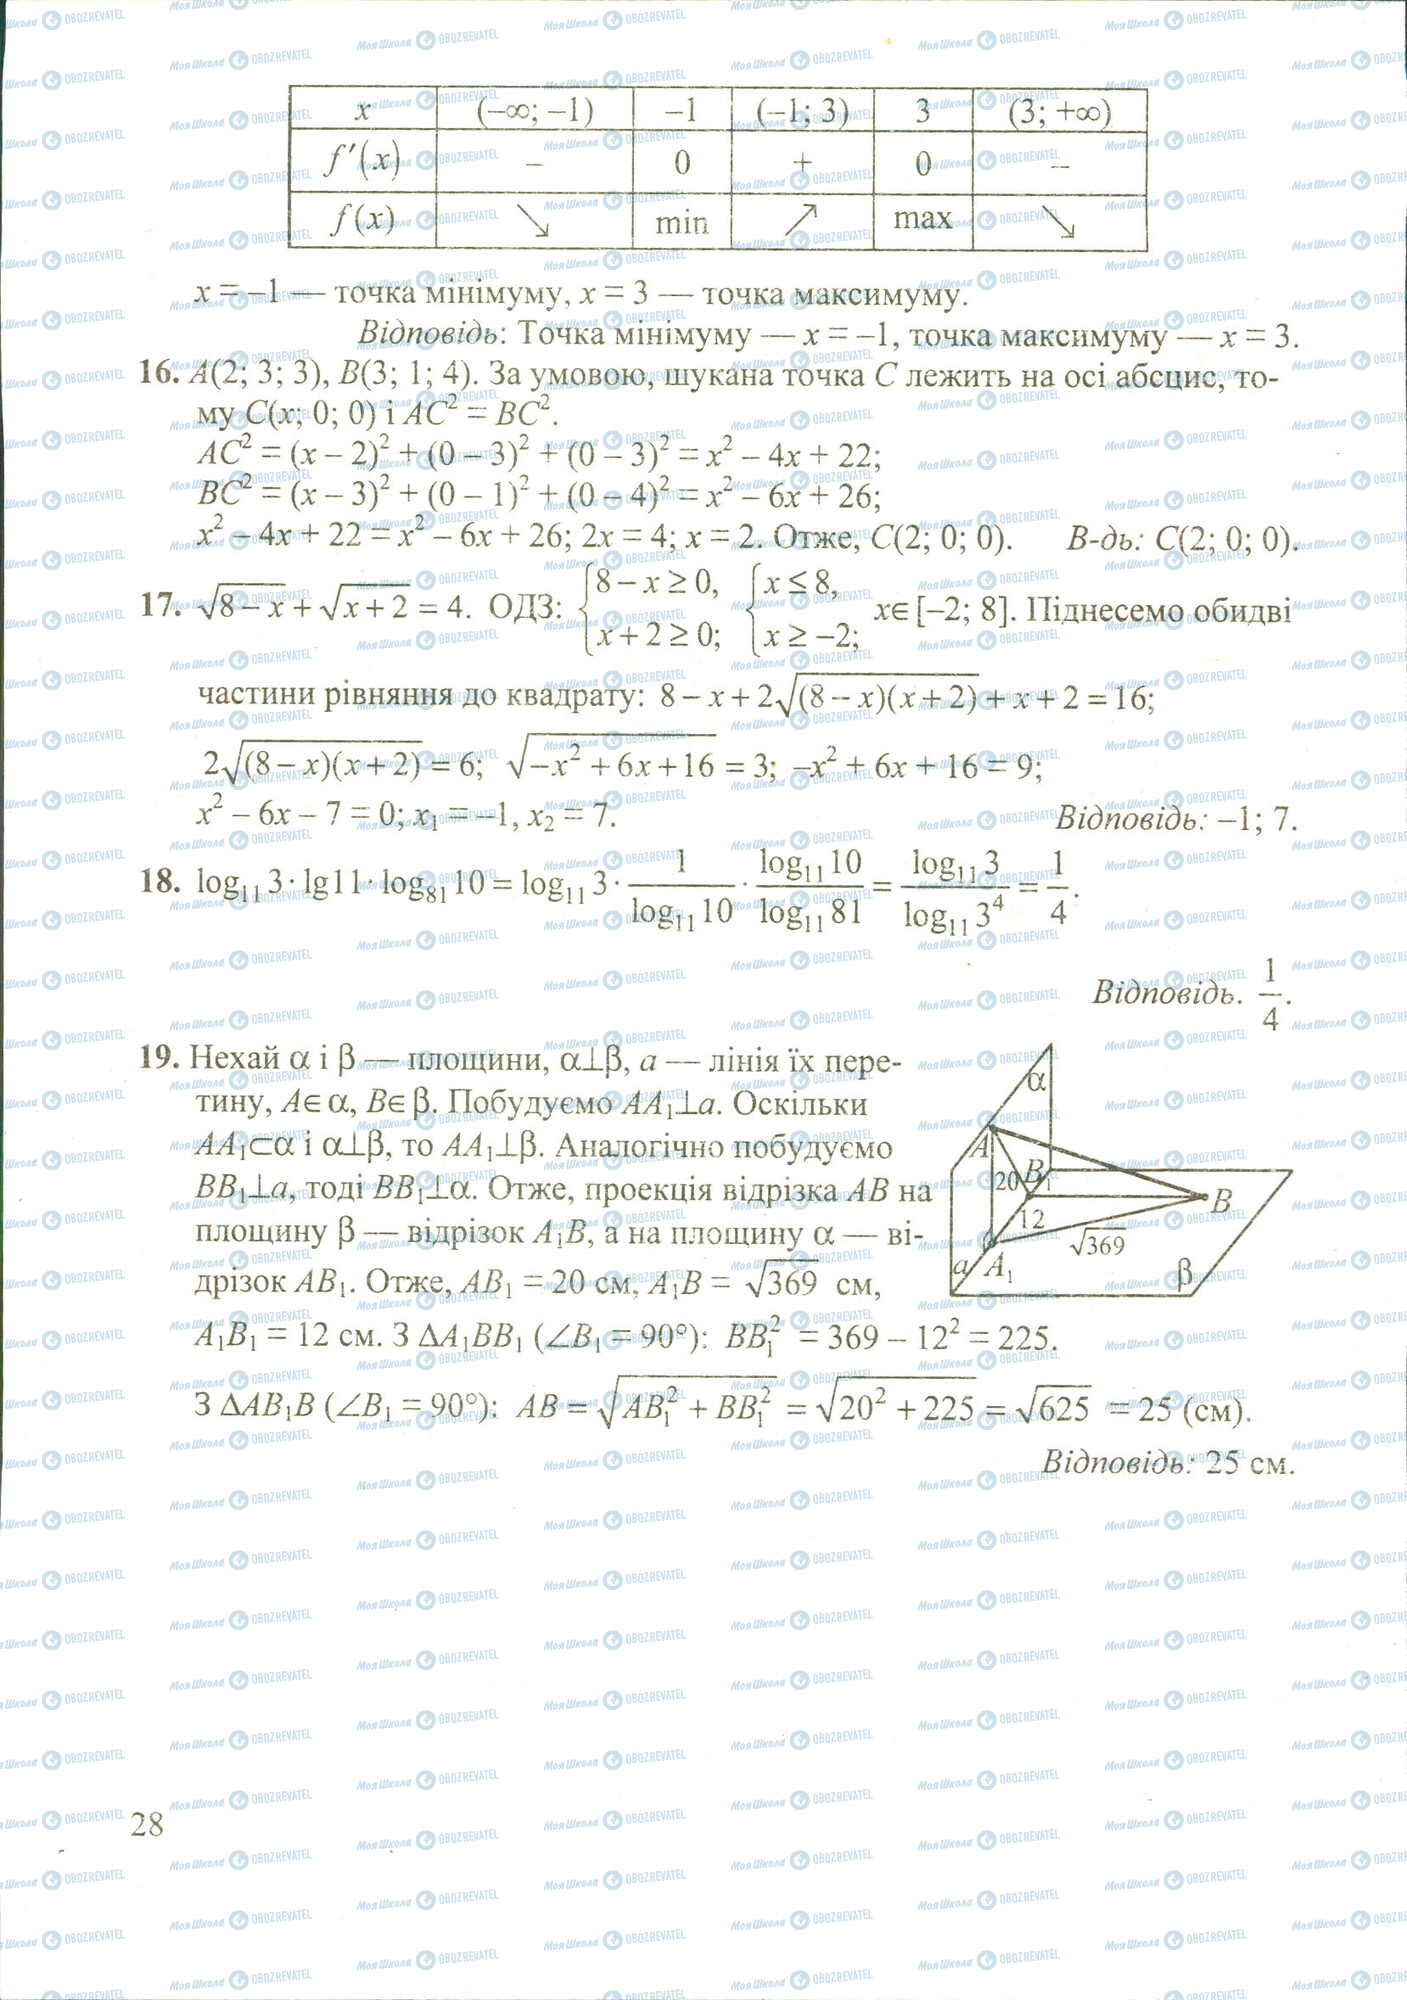 ДПА Математика 11 класс страница image0000013B